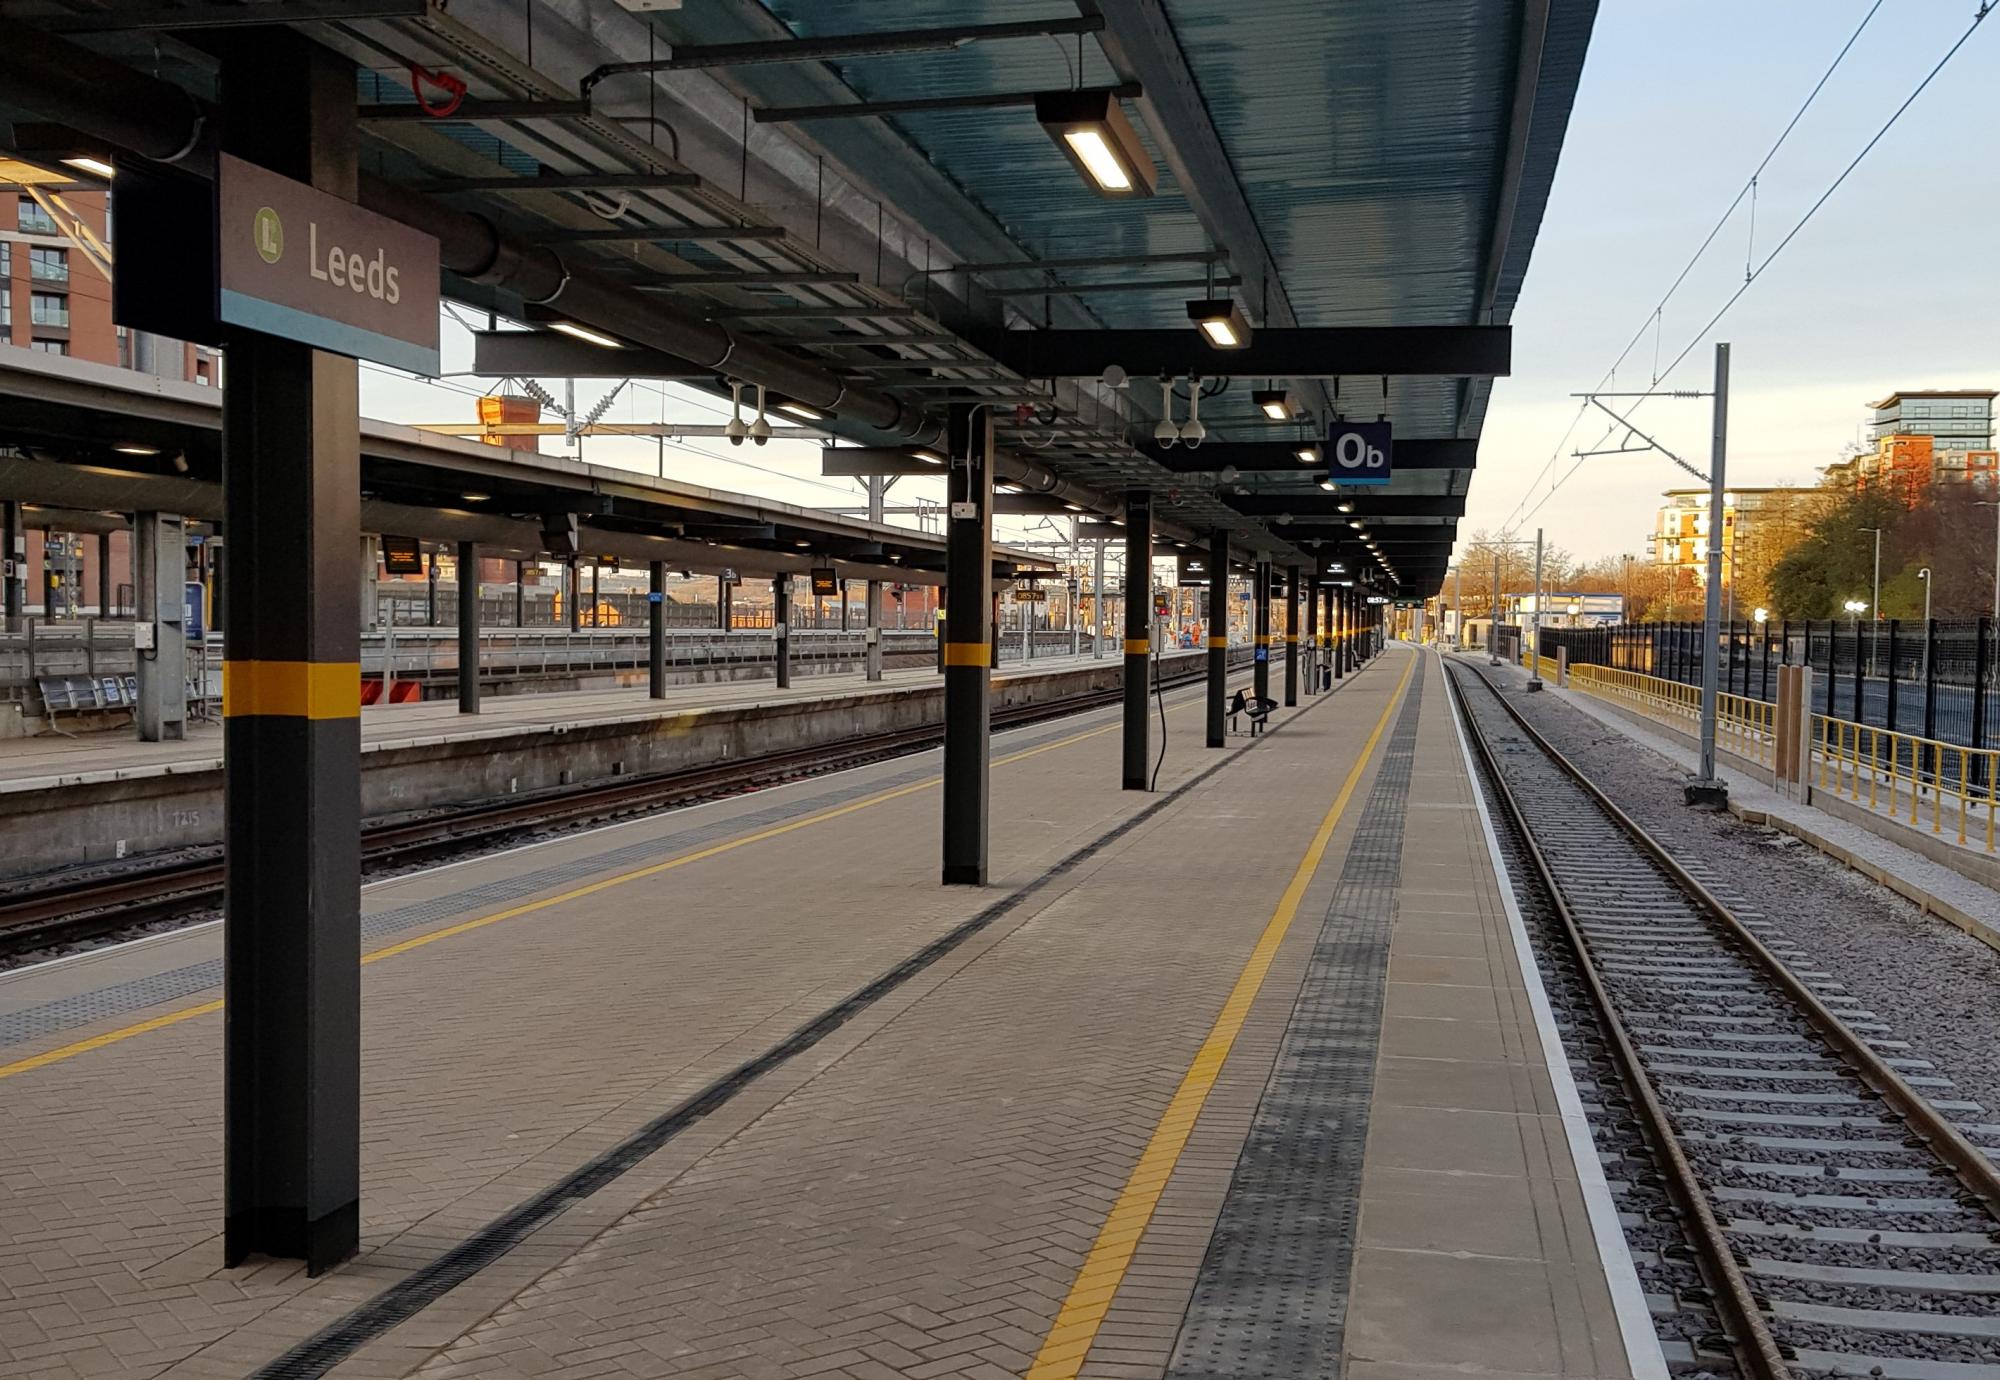 Brand-new platform unveiled at Leeds station 